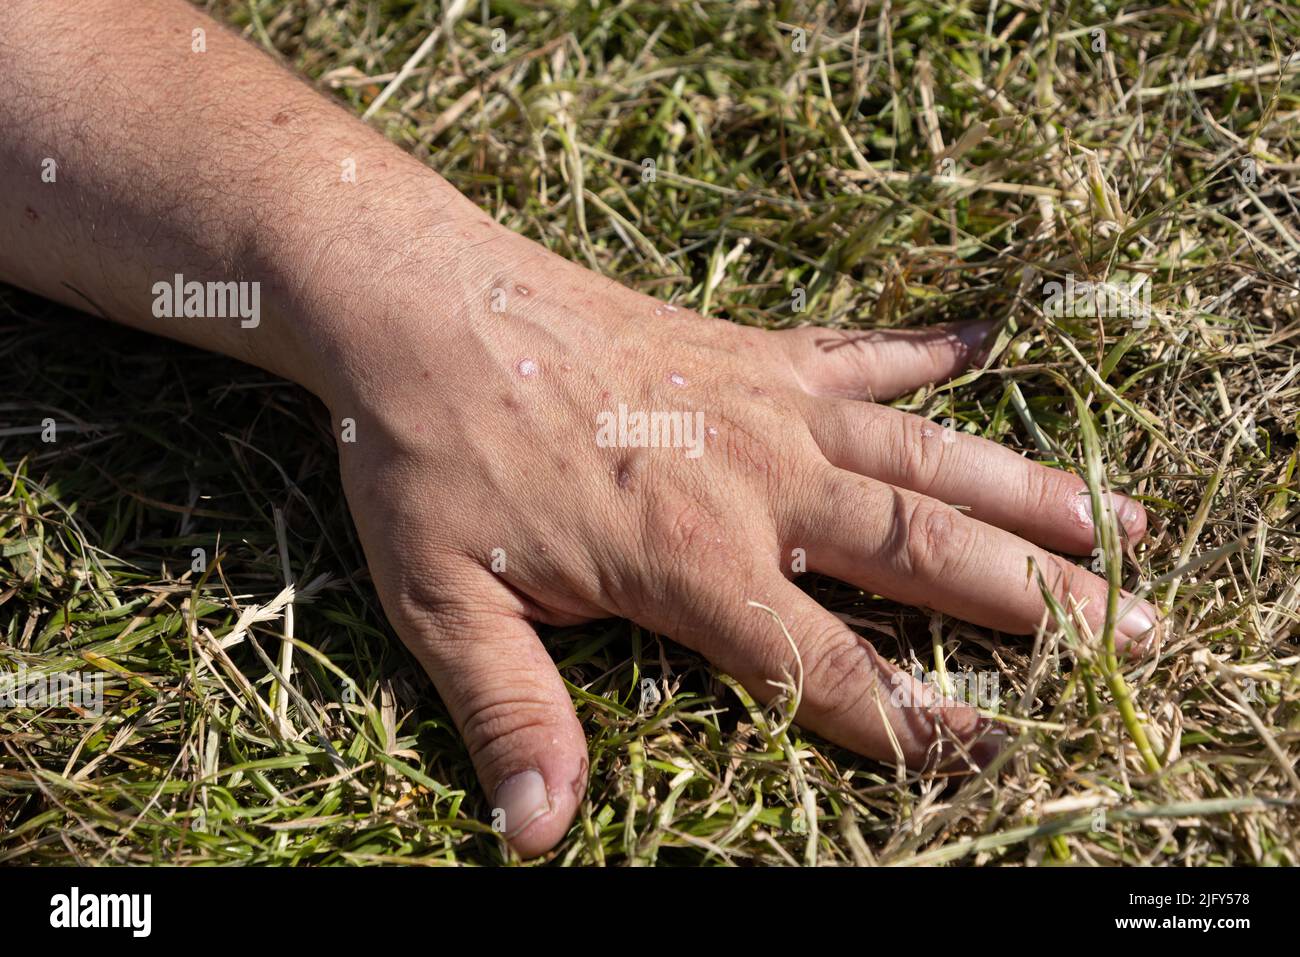 Mild case of Psoriasis or eczema on hands Stock Photo